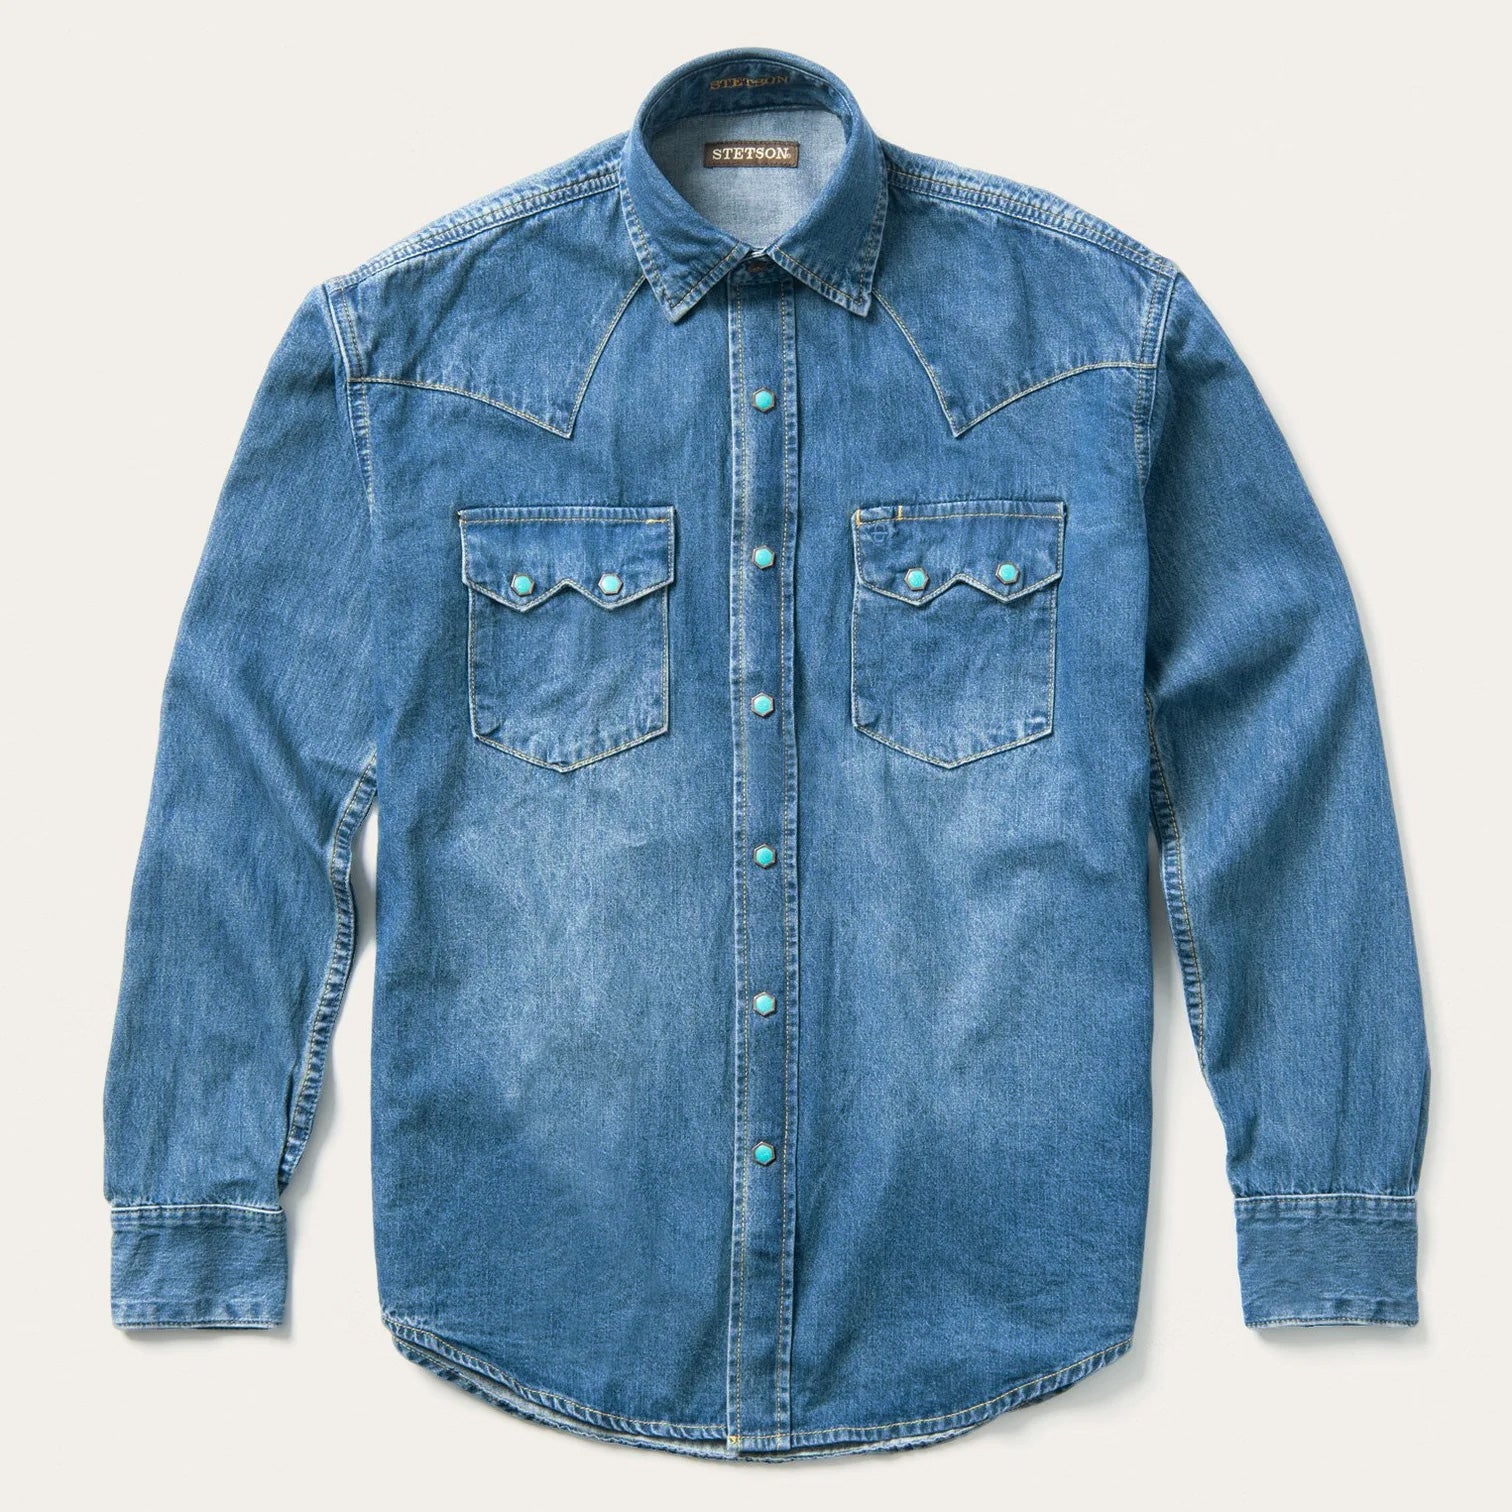 Buy Latest Classic Blue Denim Shirt Men at Great Price Online – VUDU